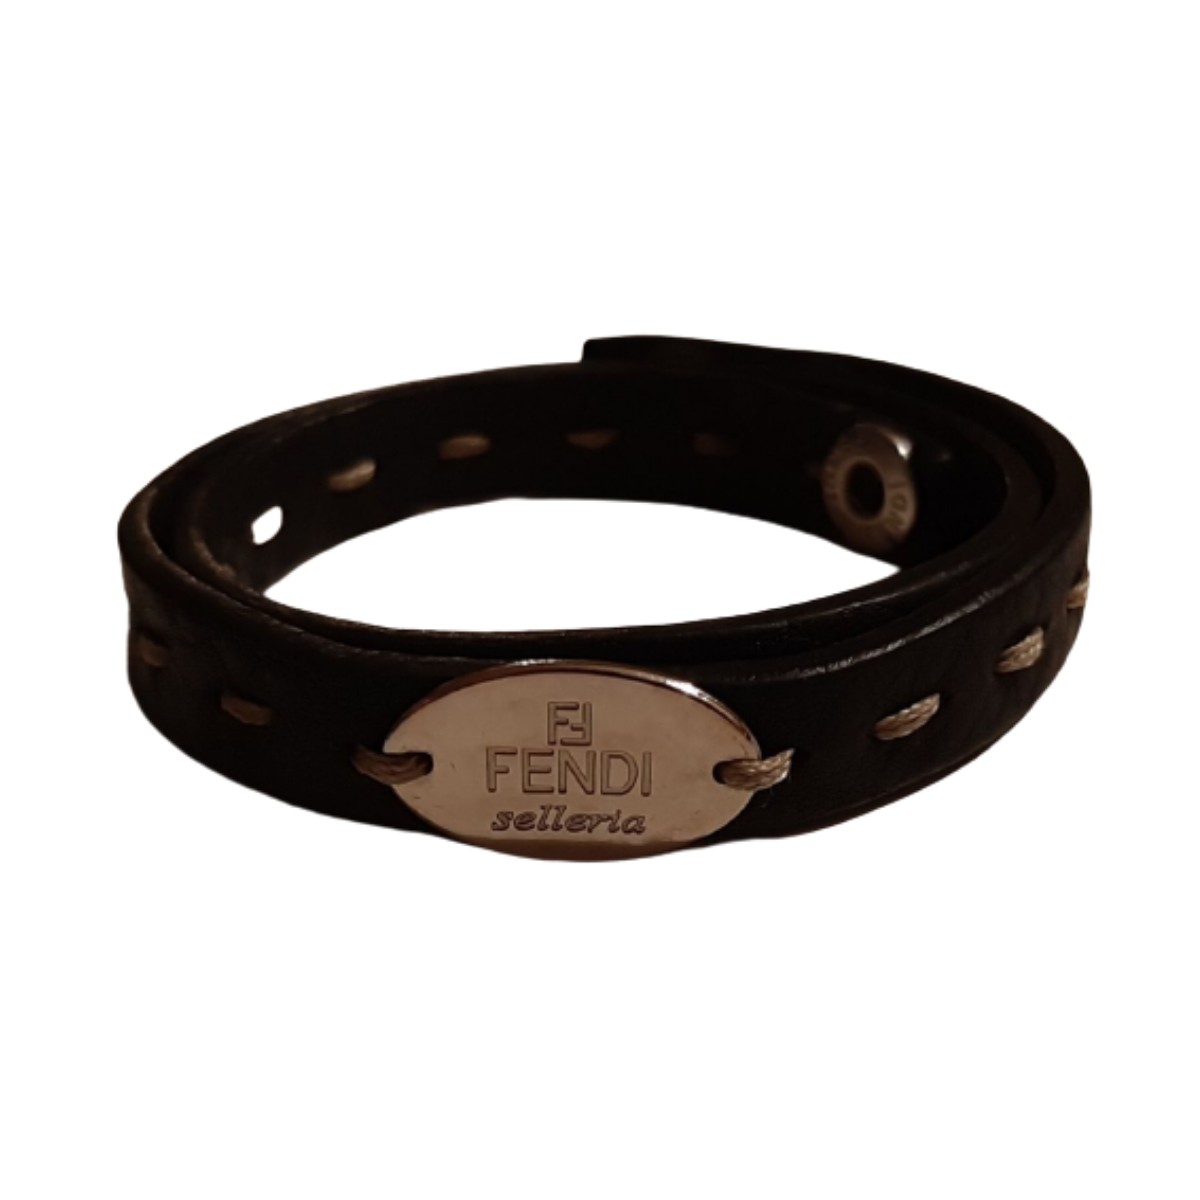 Fendi Selleria Double Wrap Black Leather Bracelet | My good closet